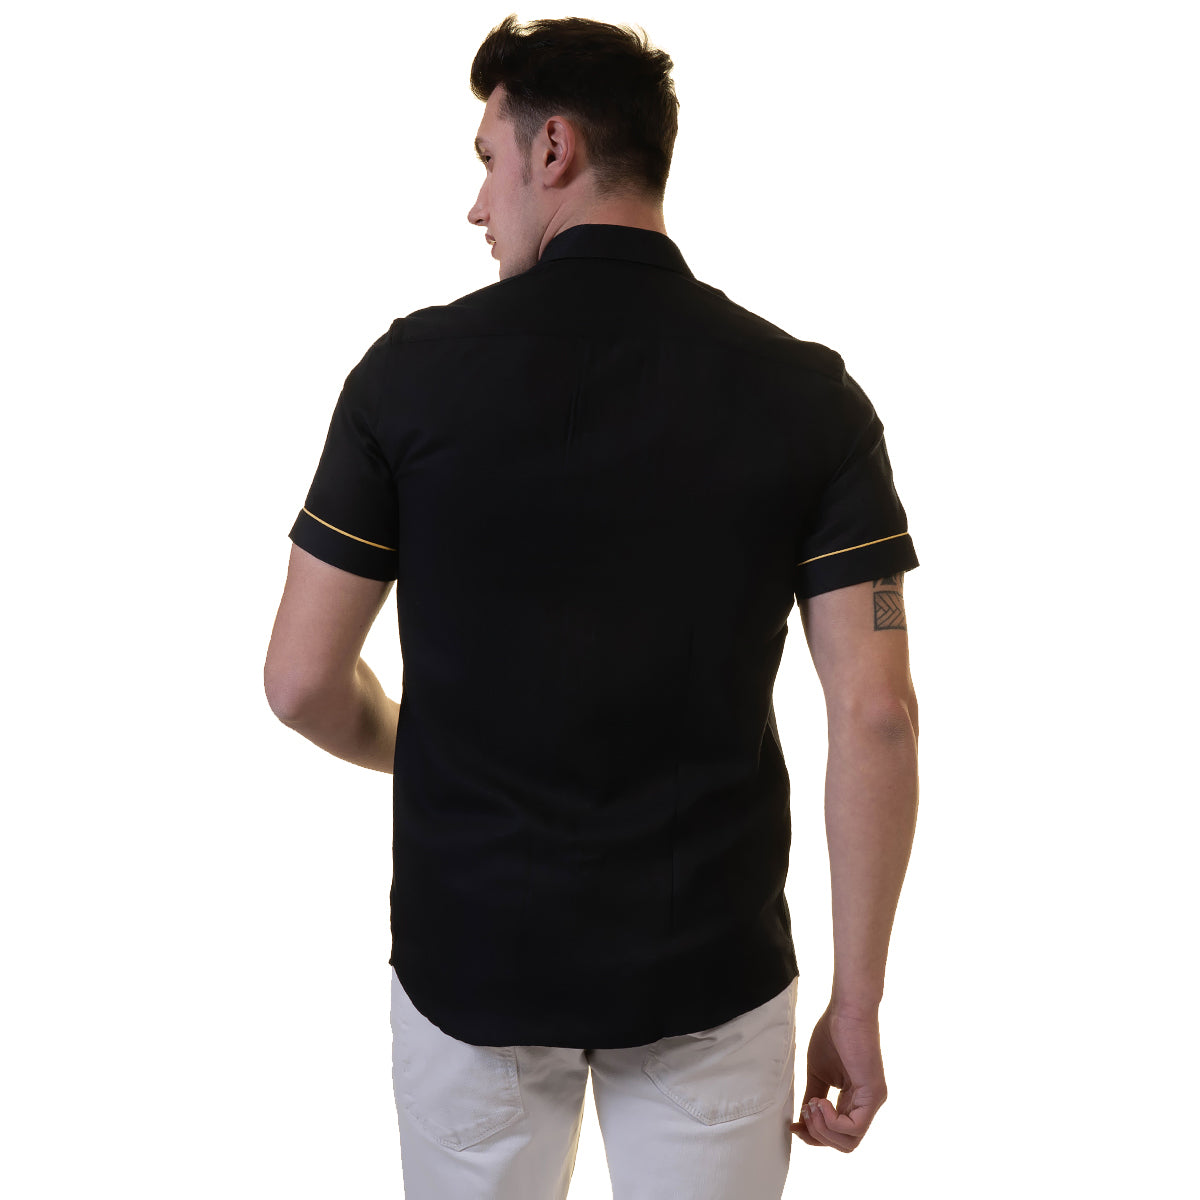 Jet Black Mens Short Sleeve Button up Shirts - Tailored Slim Fit Cotton Dress Shirts